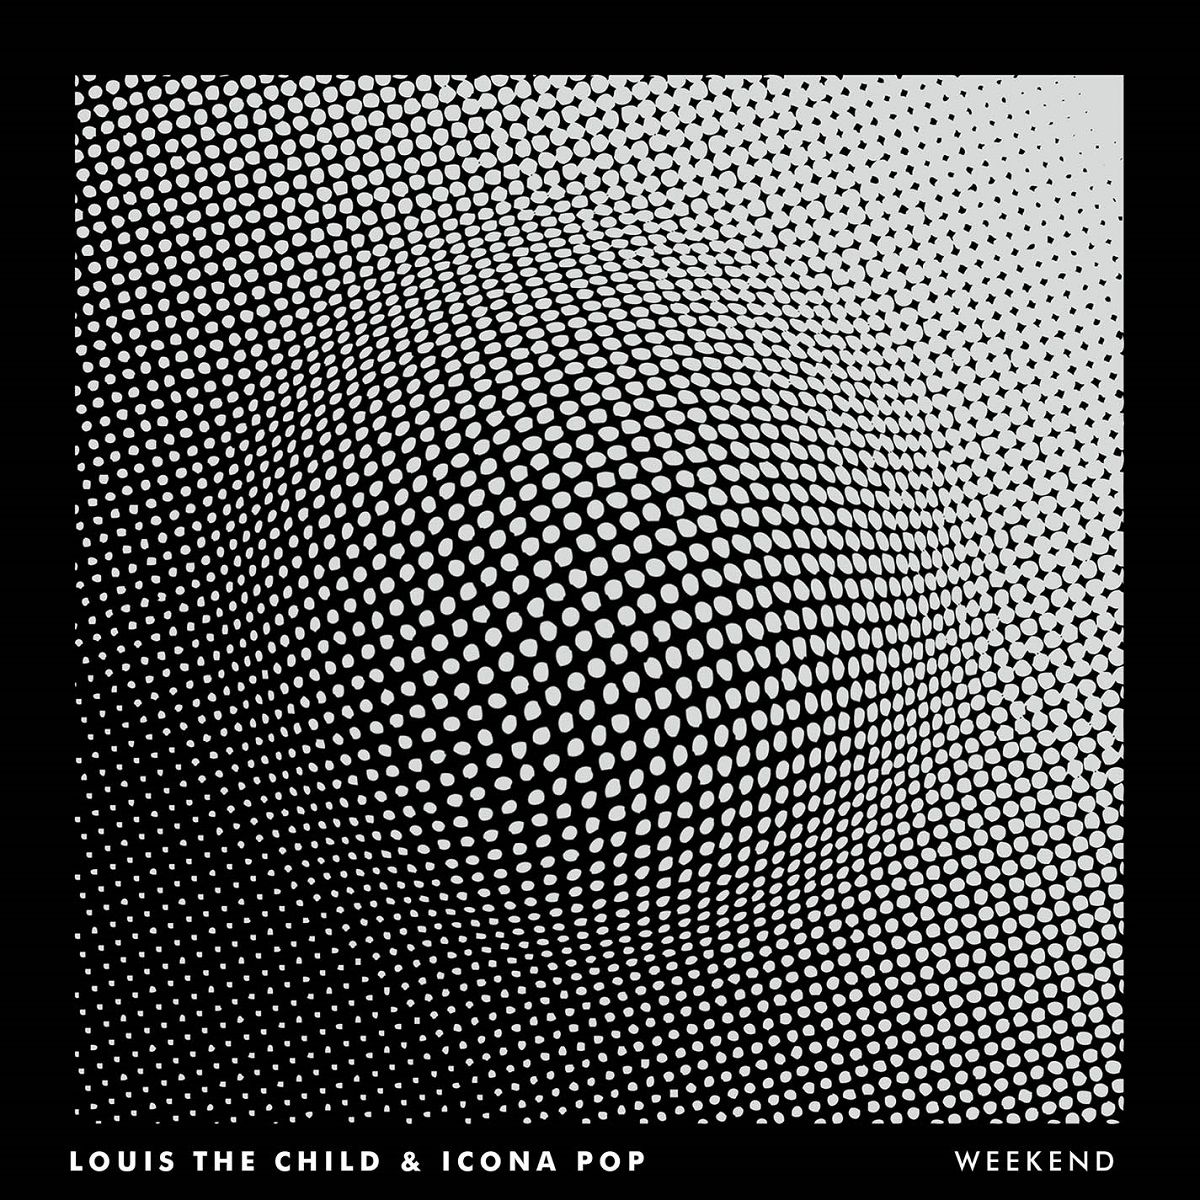 Louis The Child & Icona Pop - Weekend (Original Mix) [클럽, 몽롱, 칠트랩]